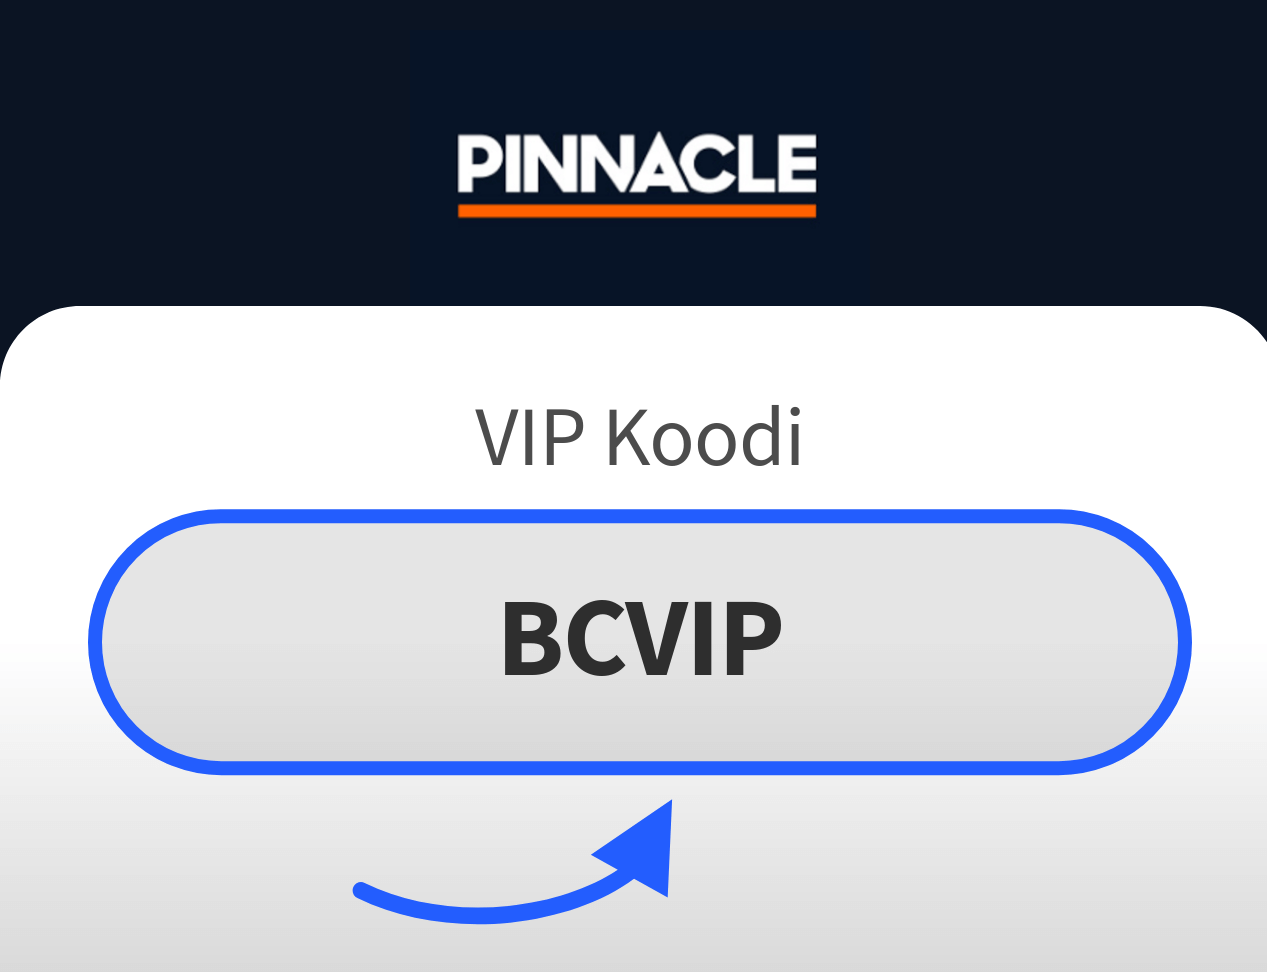 Pinnacle VIP Koodi